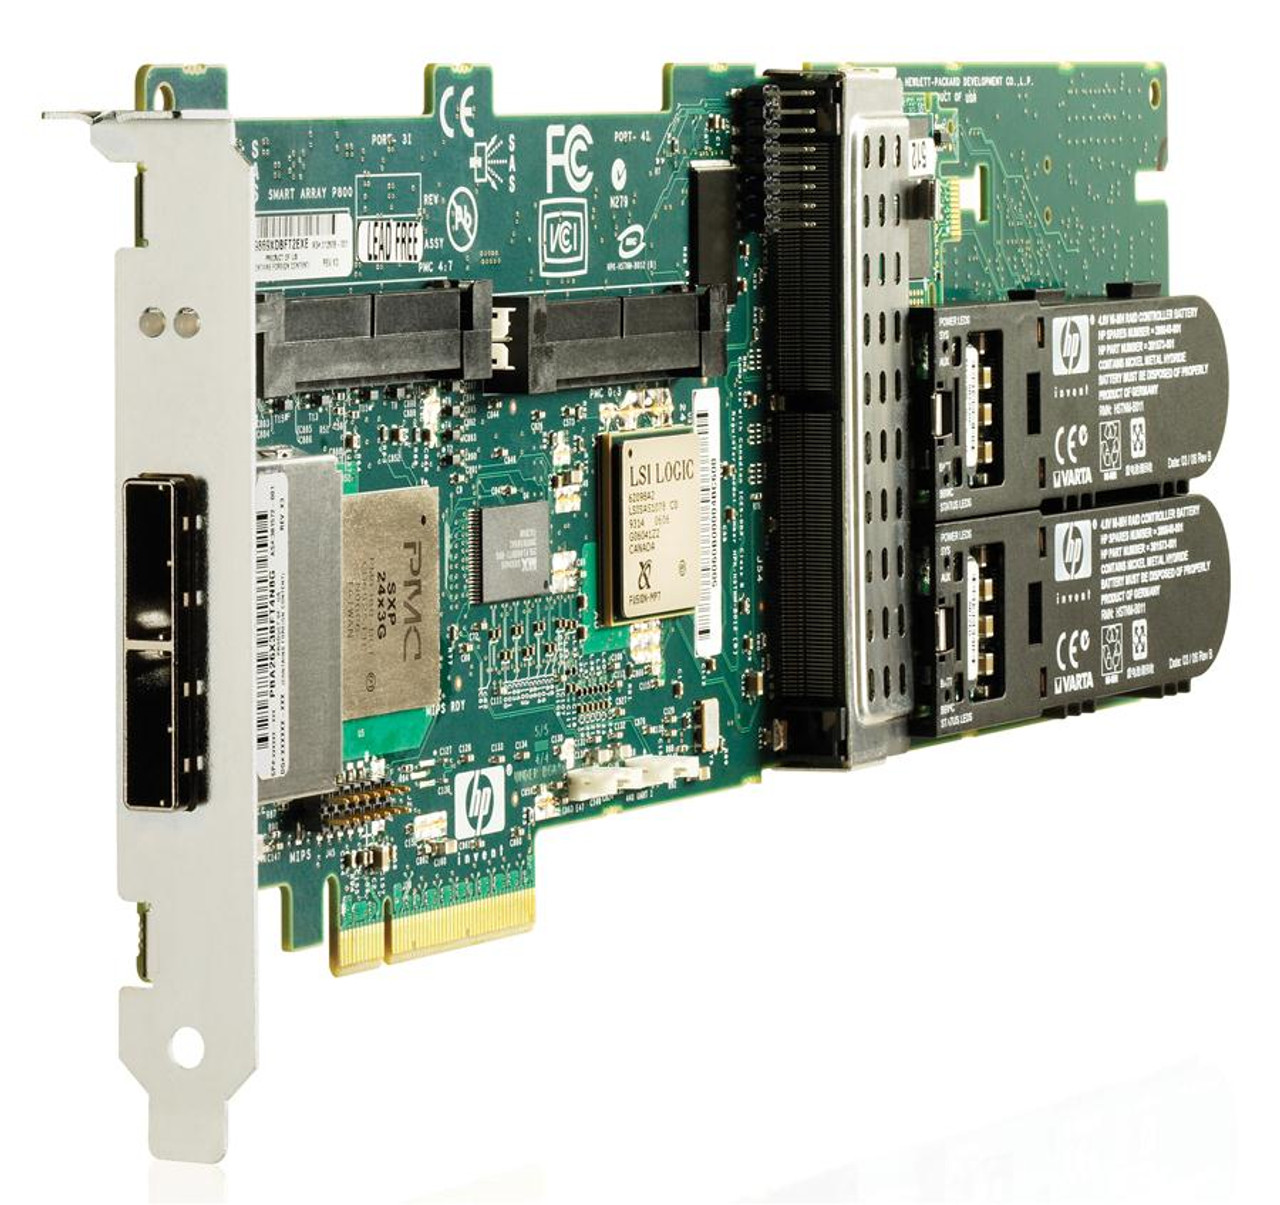 012608-002 - HP Smart Array P800 16-Port SAS RAID Controller Card